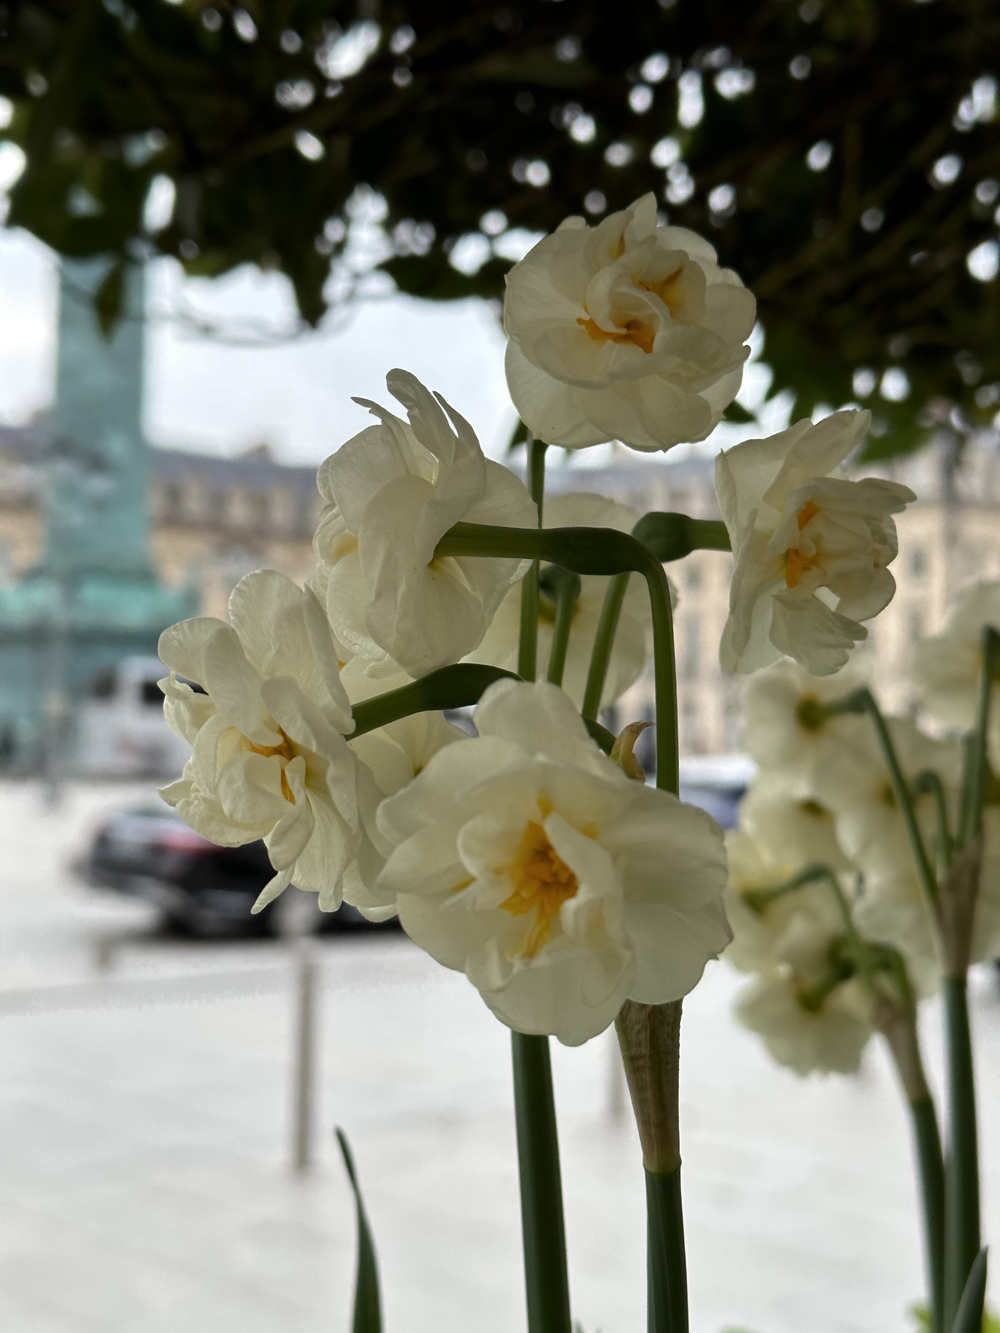 Daffodils admire a column on Place Vendome